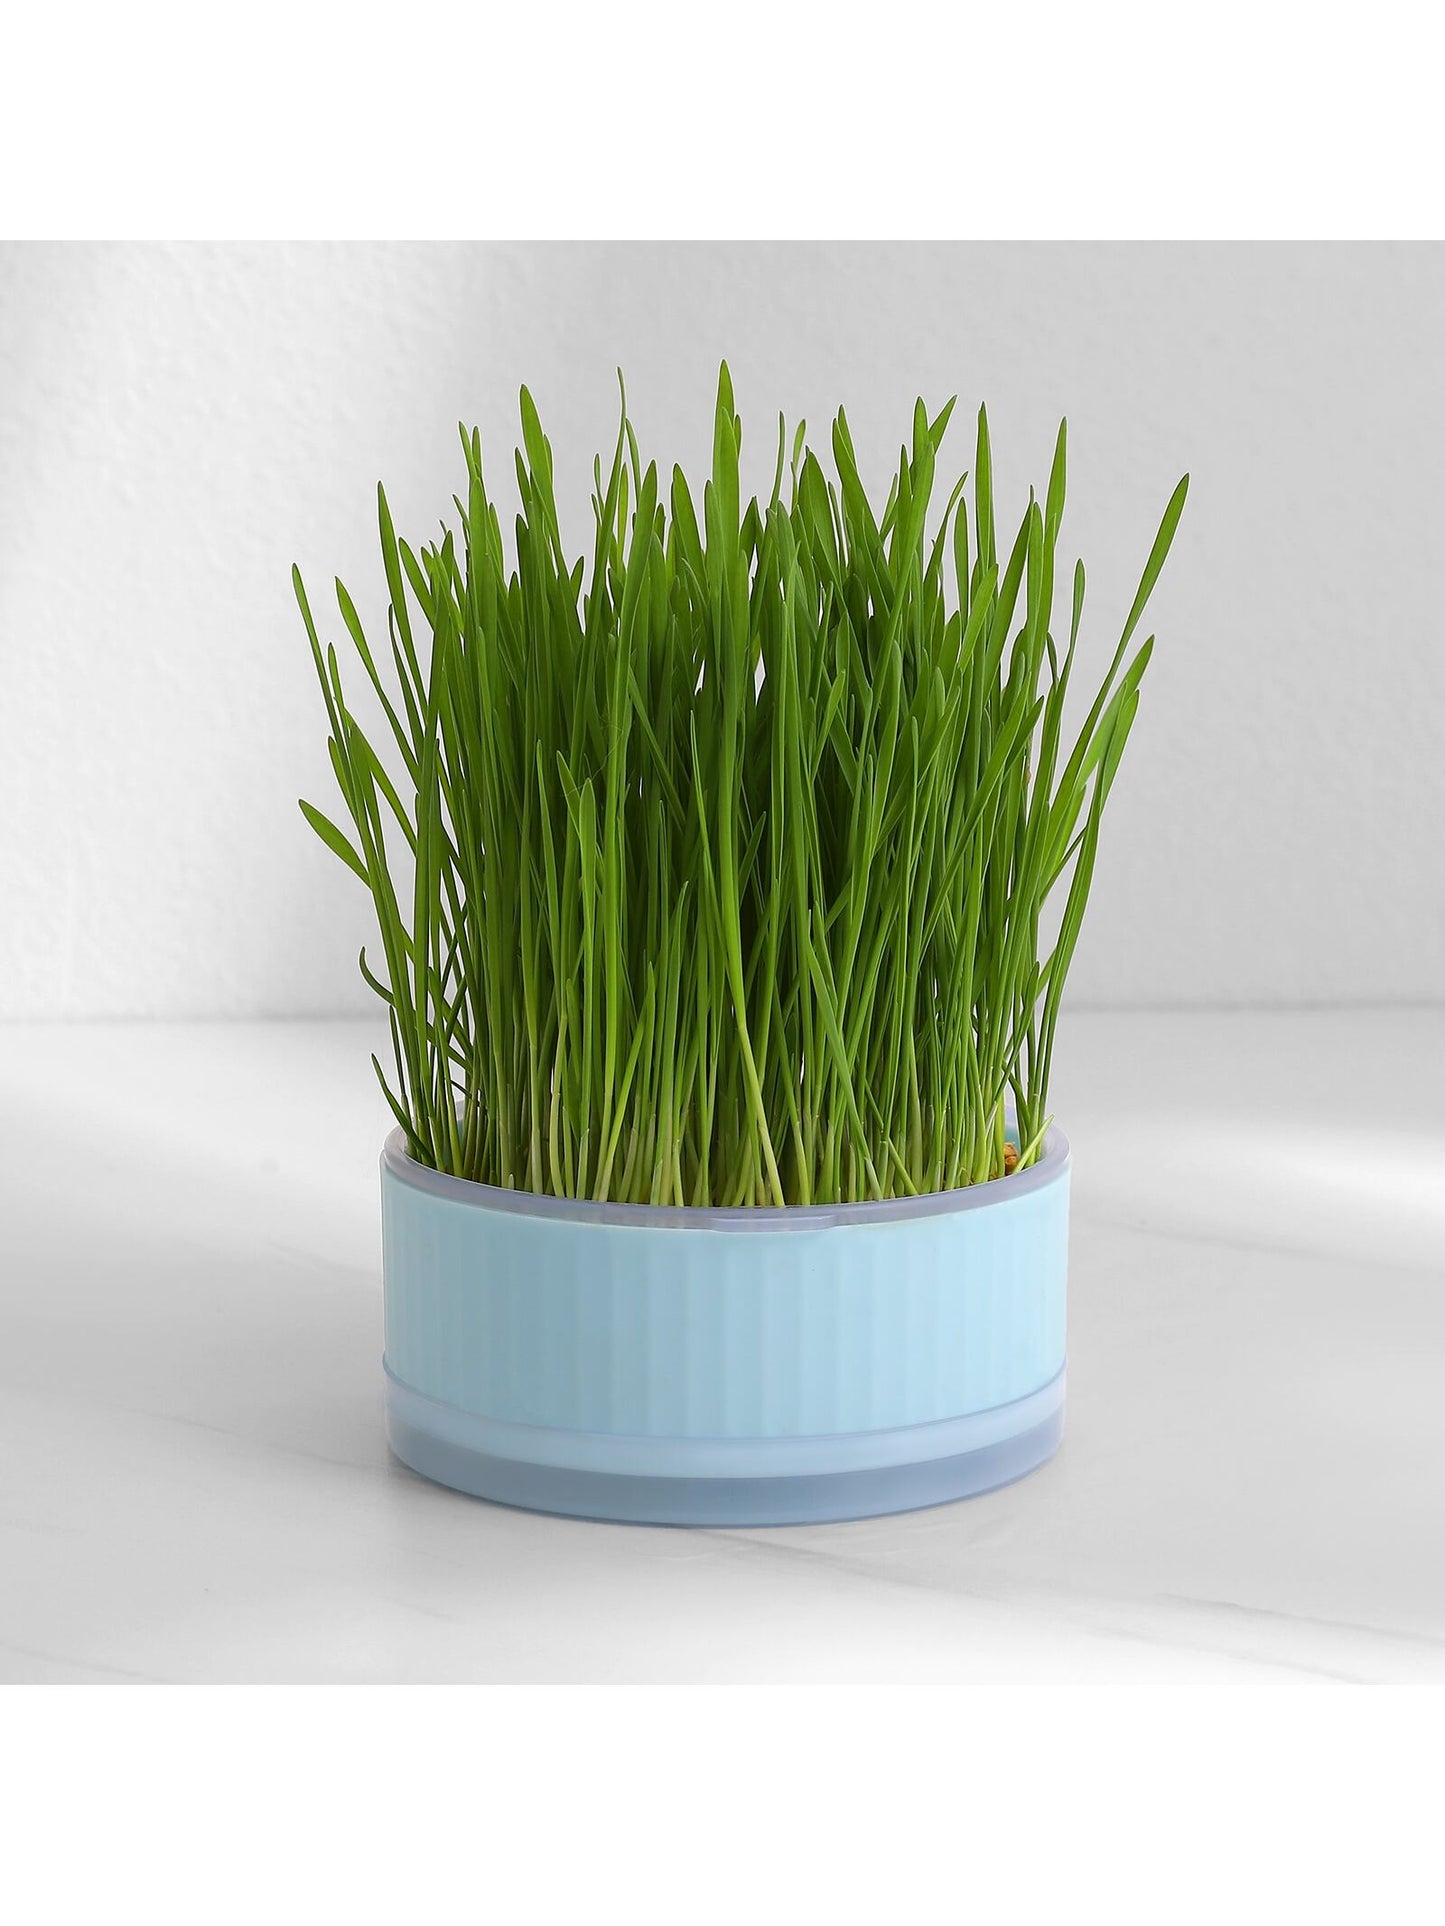 1pc Blue Round Cat Grass Box